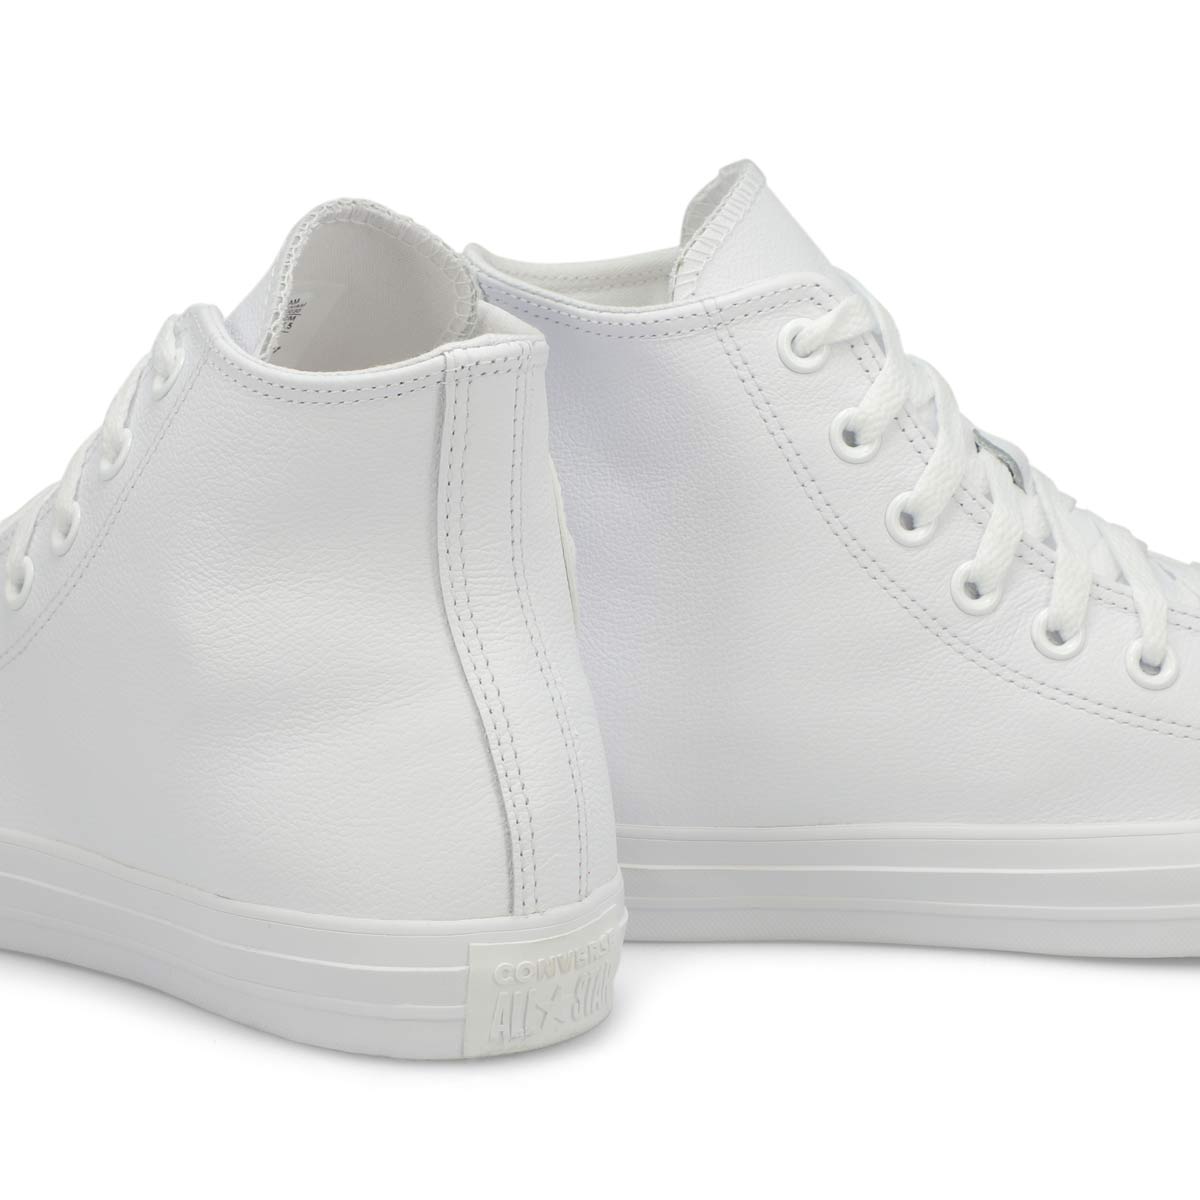 Women's All Star Leather Hi Top Sneaker - White